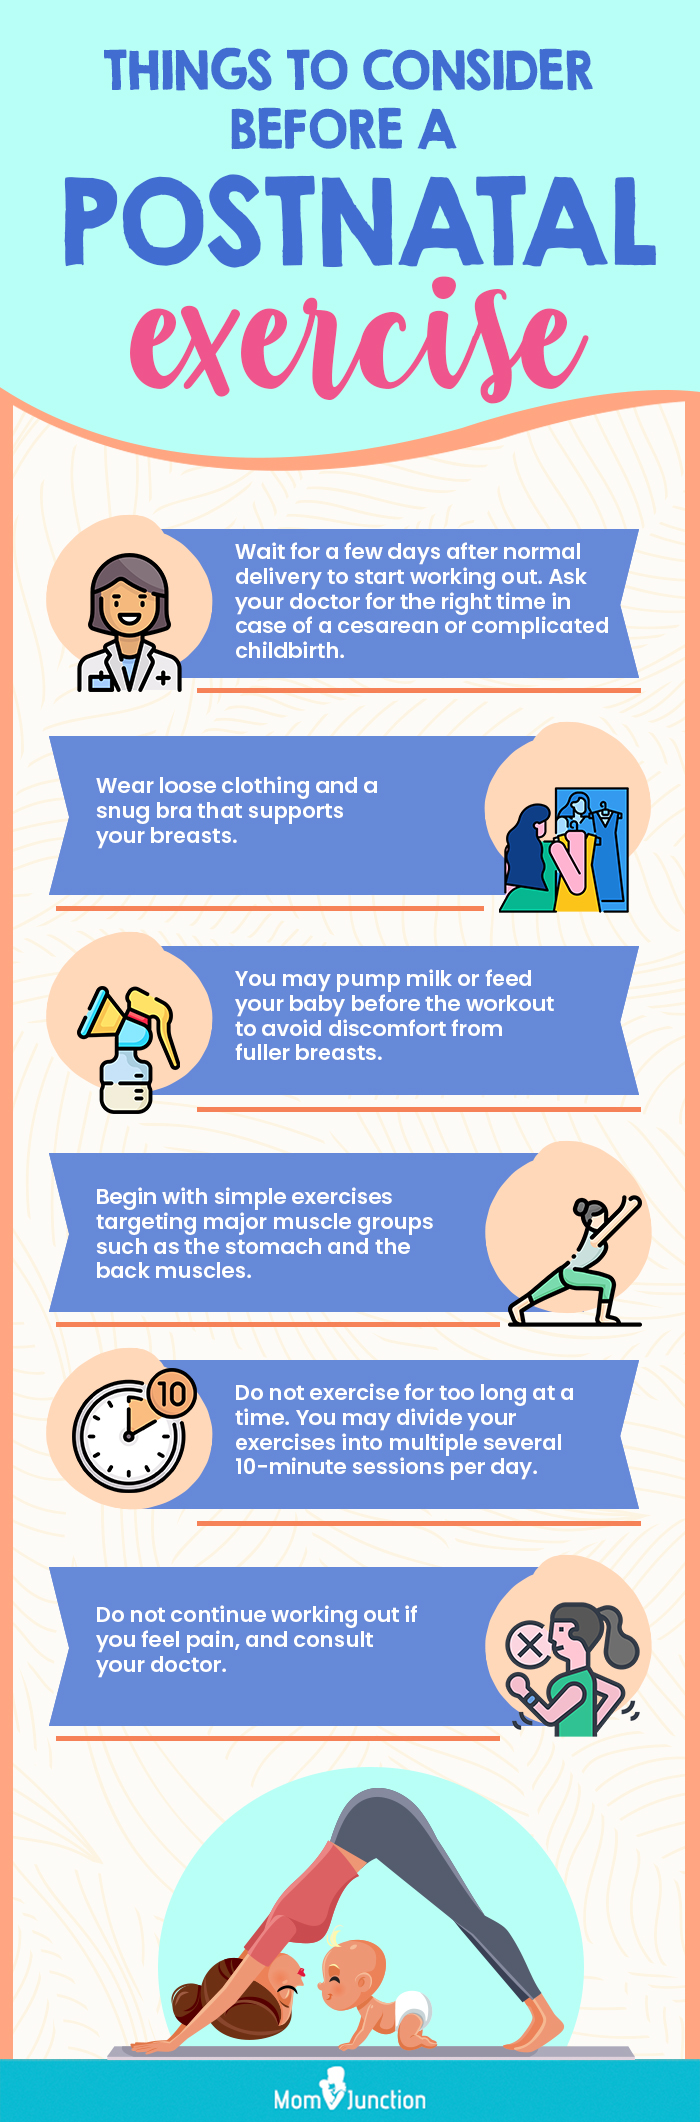 Importance of postnatal exercises